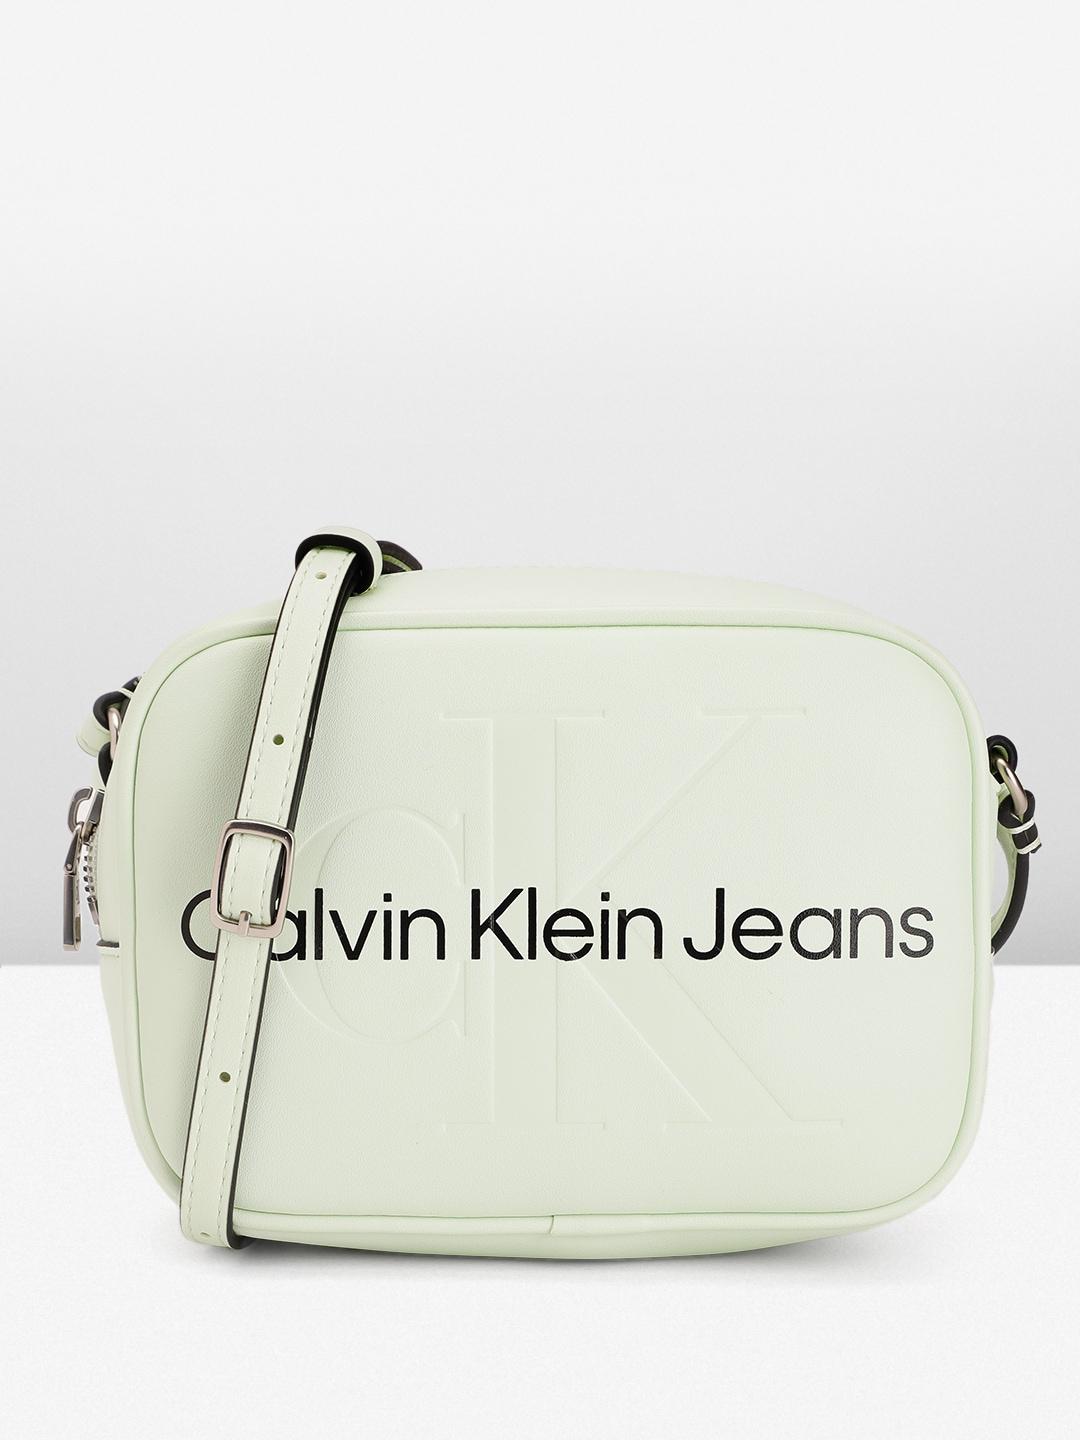 calvin klein brand logo printed & debossed structured sling bag